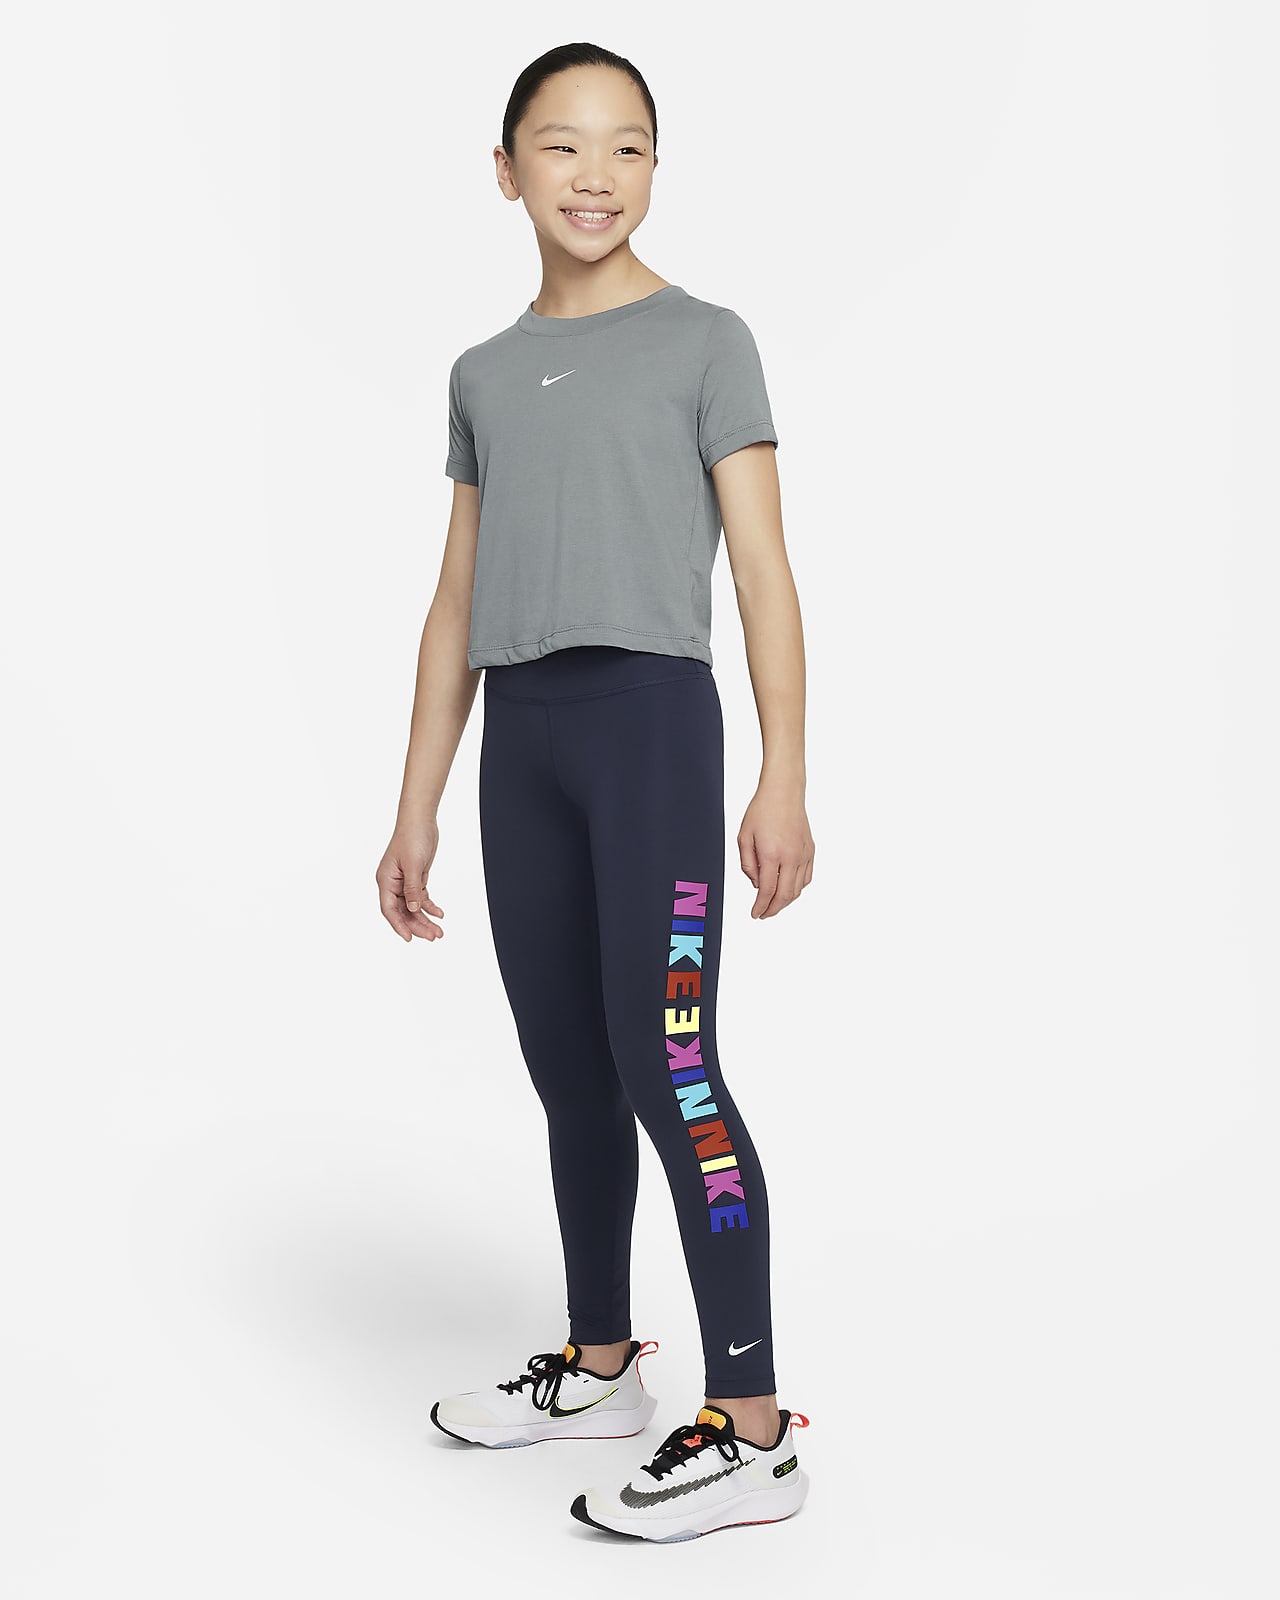 Nike Dri-FIT One Older Kids' (Girls') Leggings